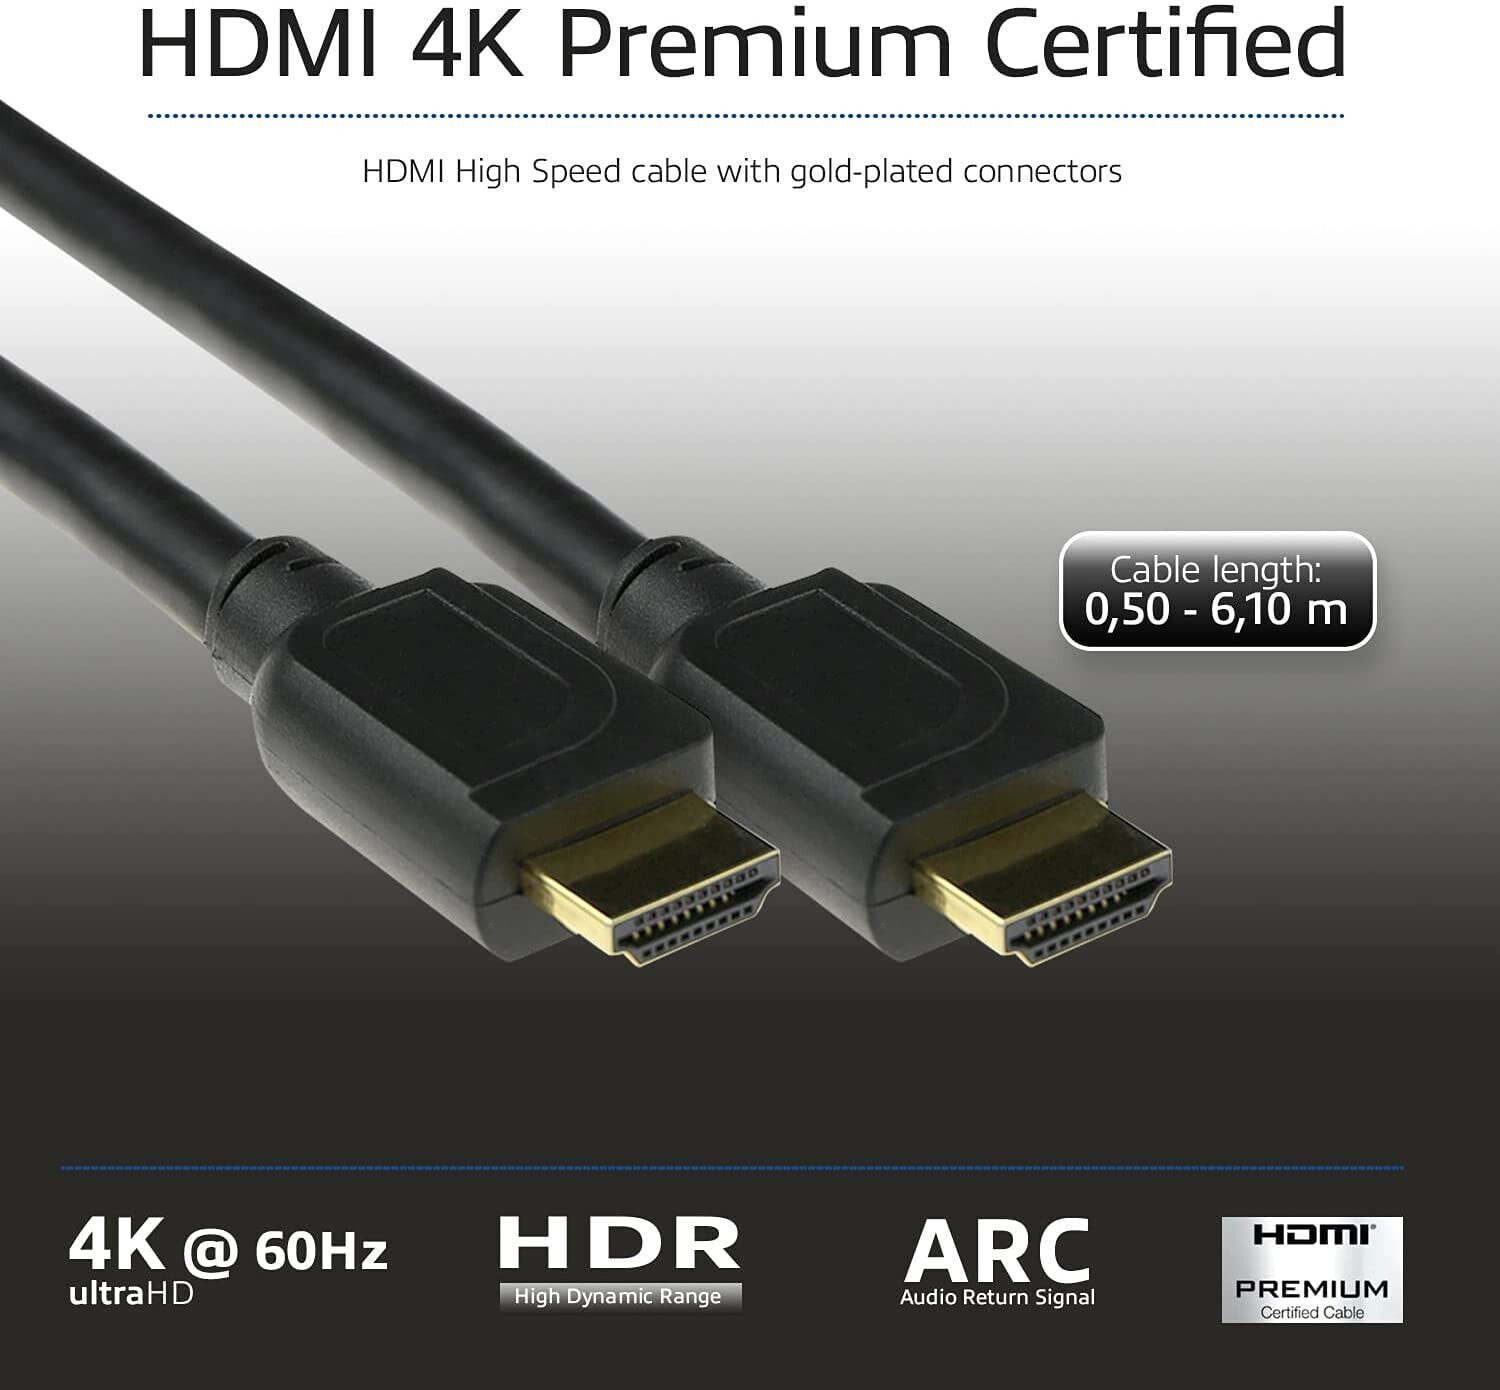 Câbles HDMI INTELLINET 10m